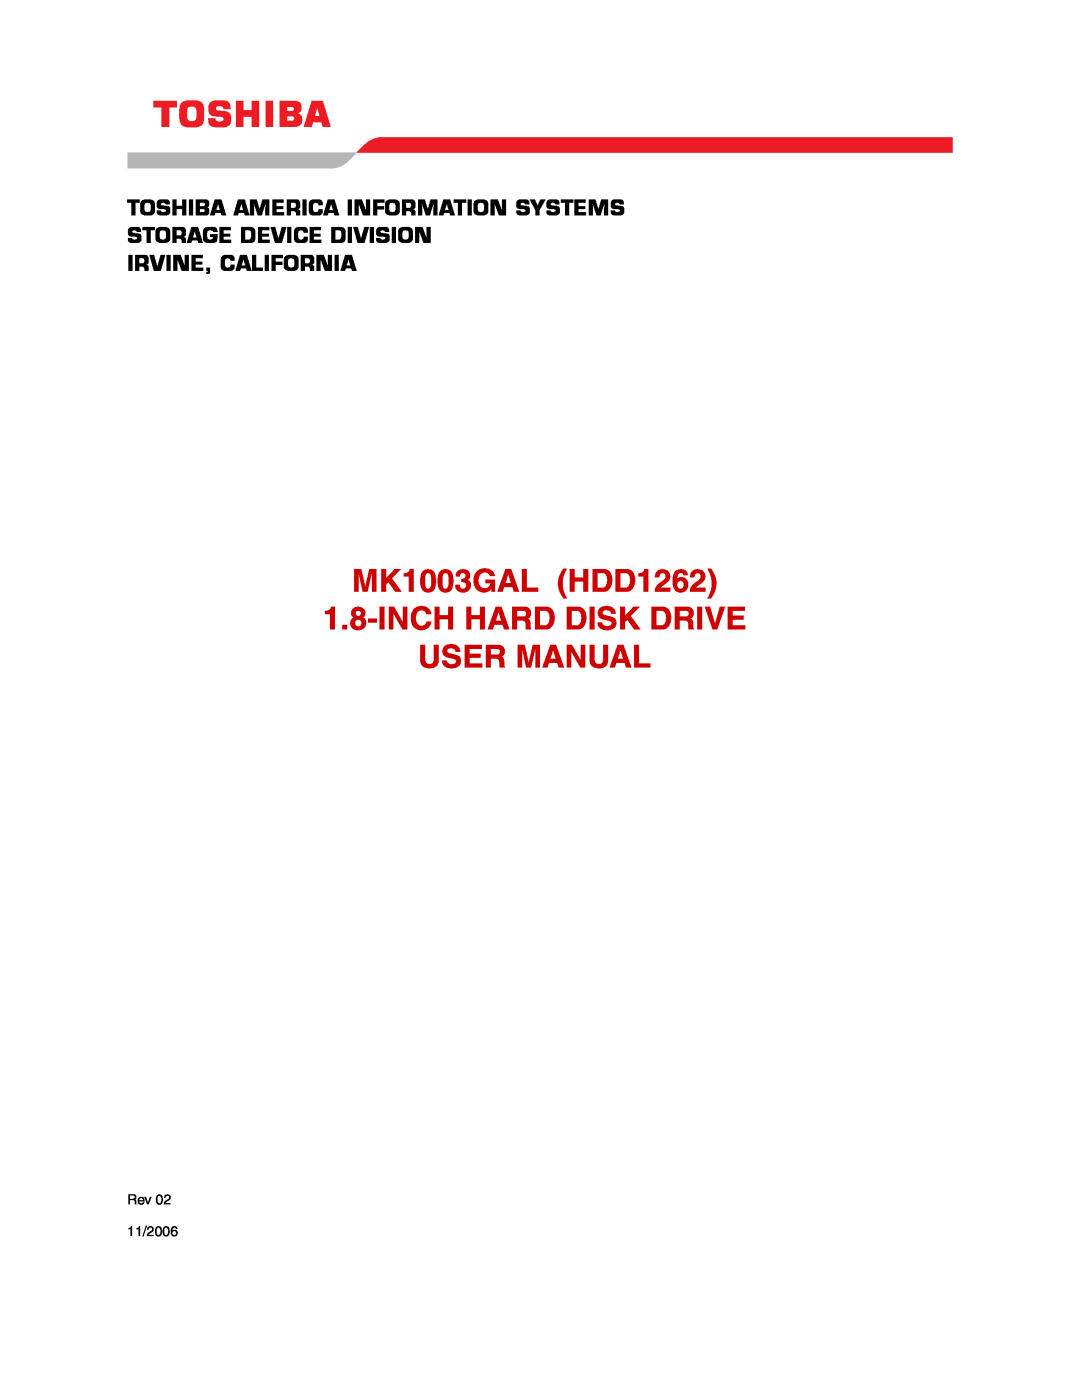 Toshiba HDD1262 user manual Toshiba America Information Systems Storage Device Division, Irvine, California, Rev 11/2006 